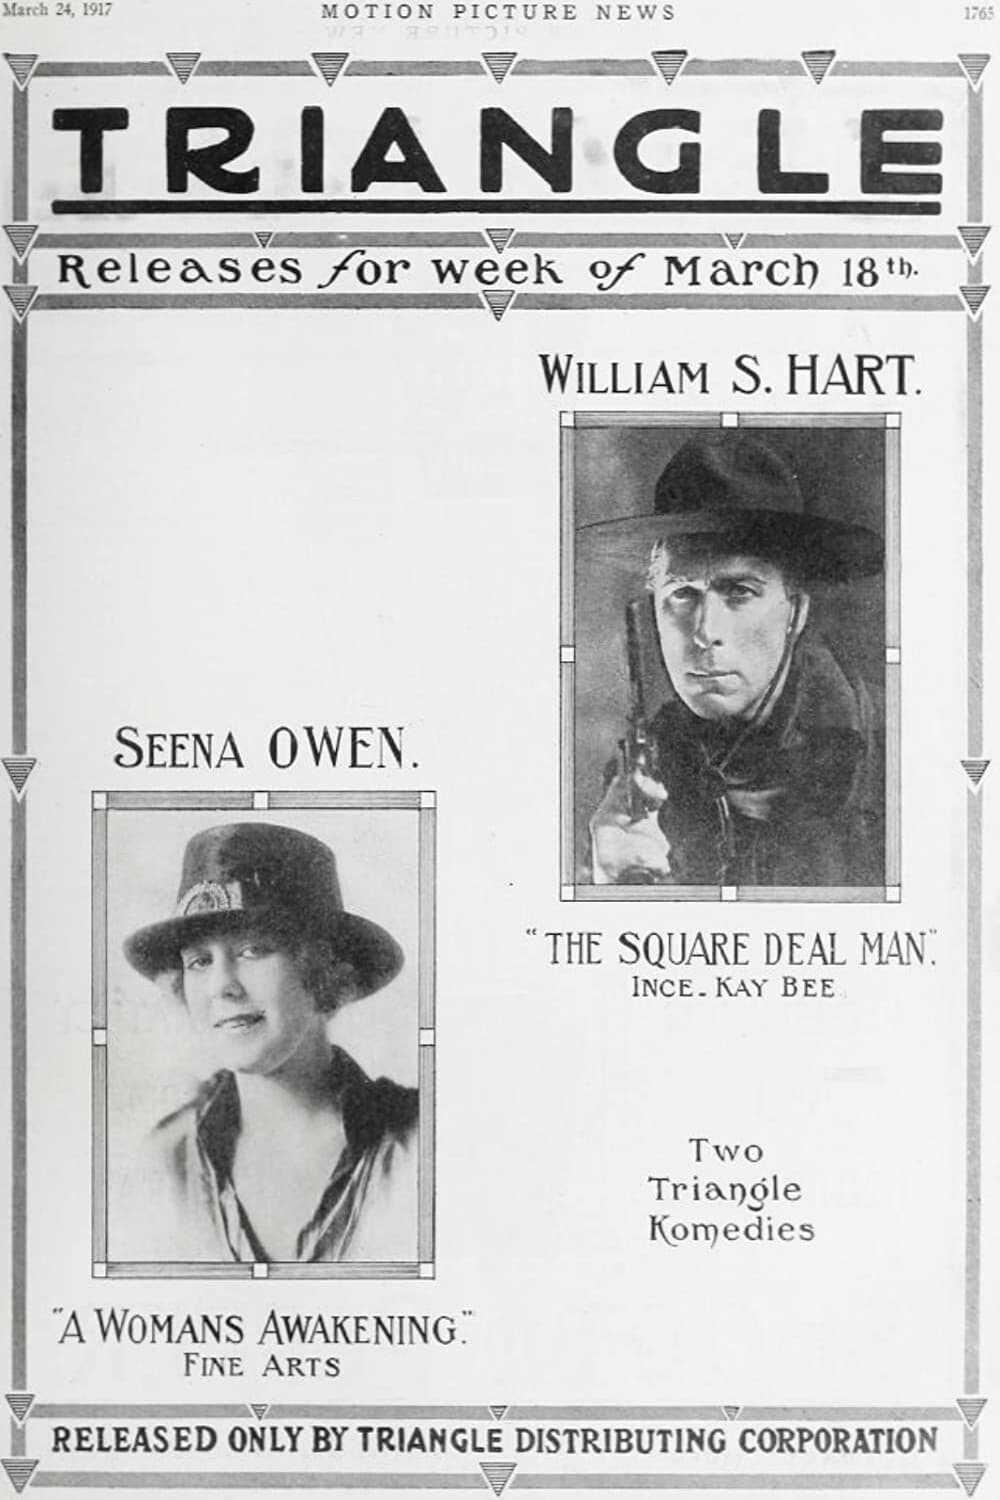 A Woman's Awakening (1917)